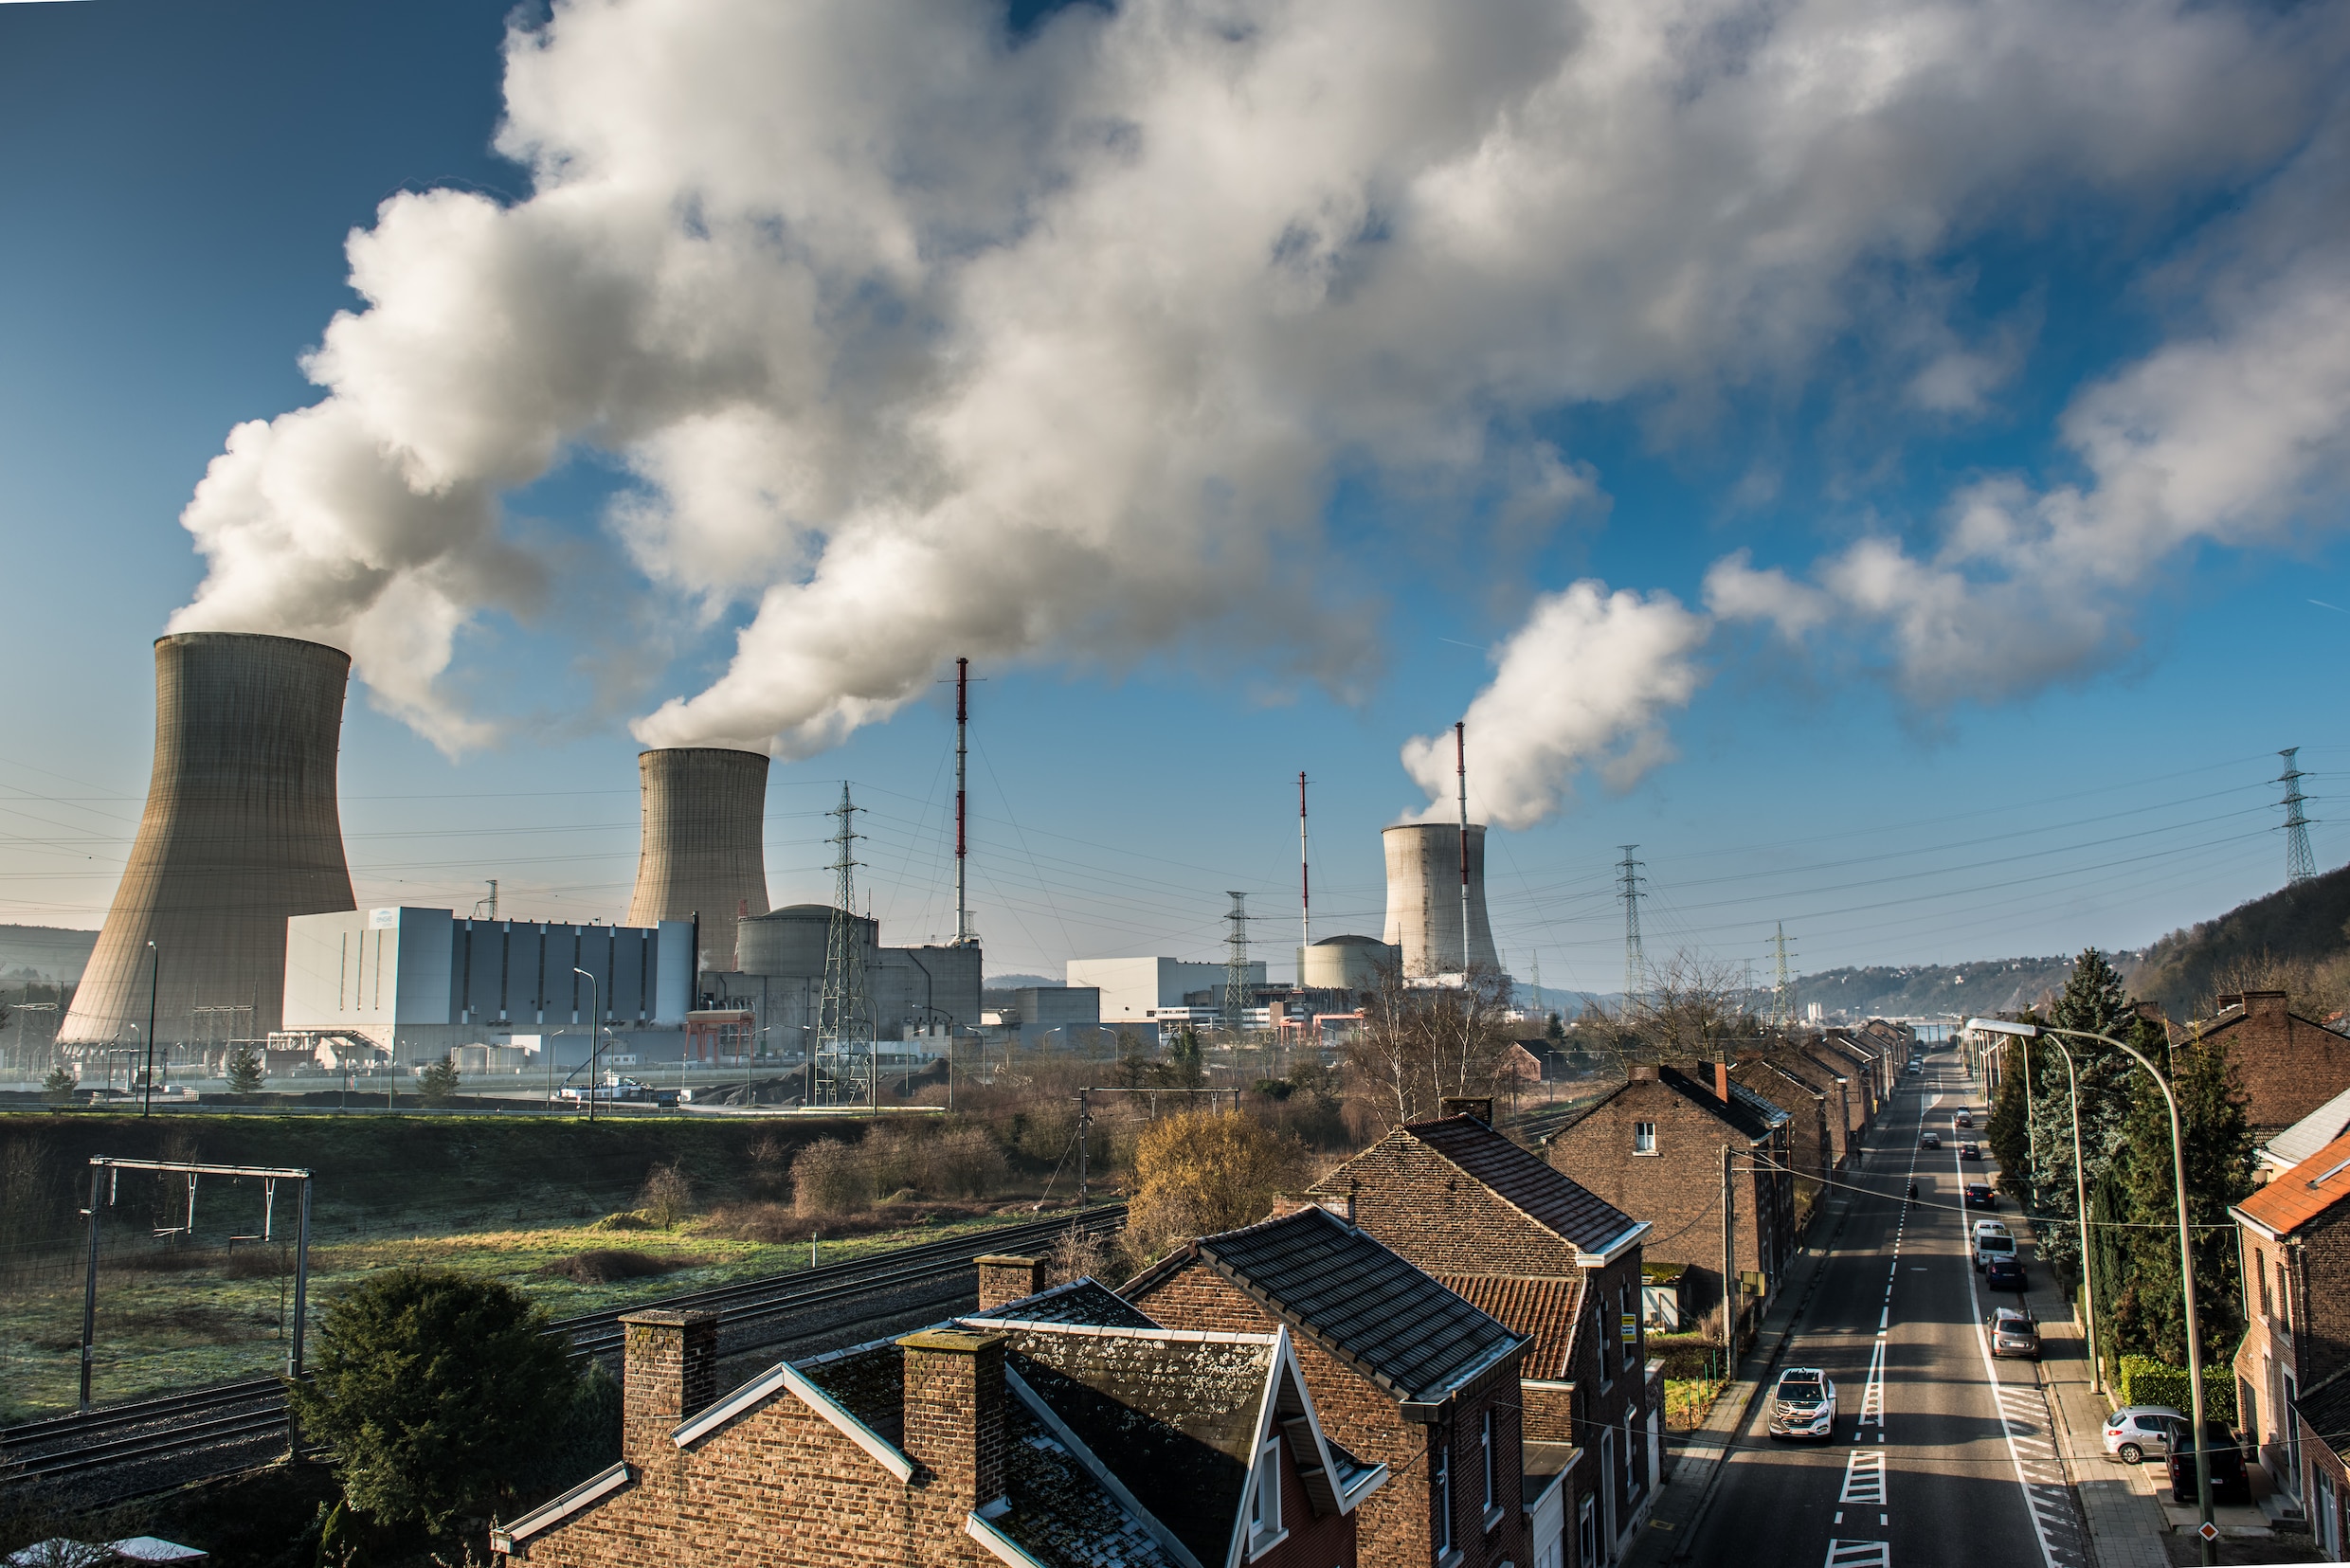 4 februari, maar de voorraad groene energie in België is nu al op